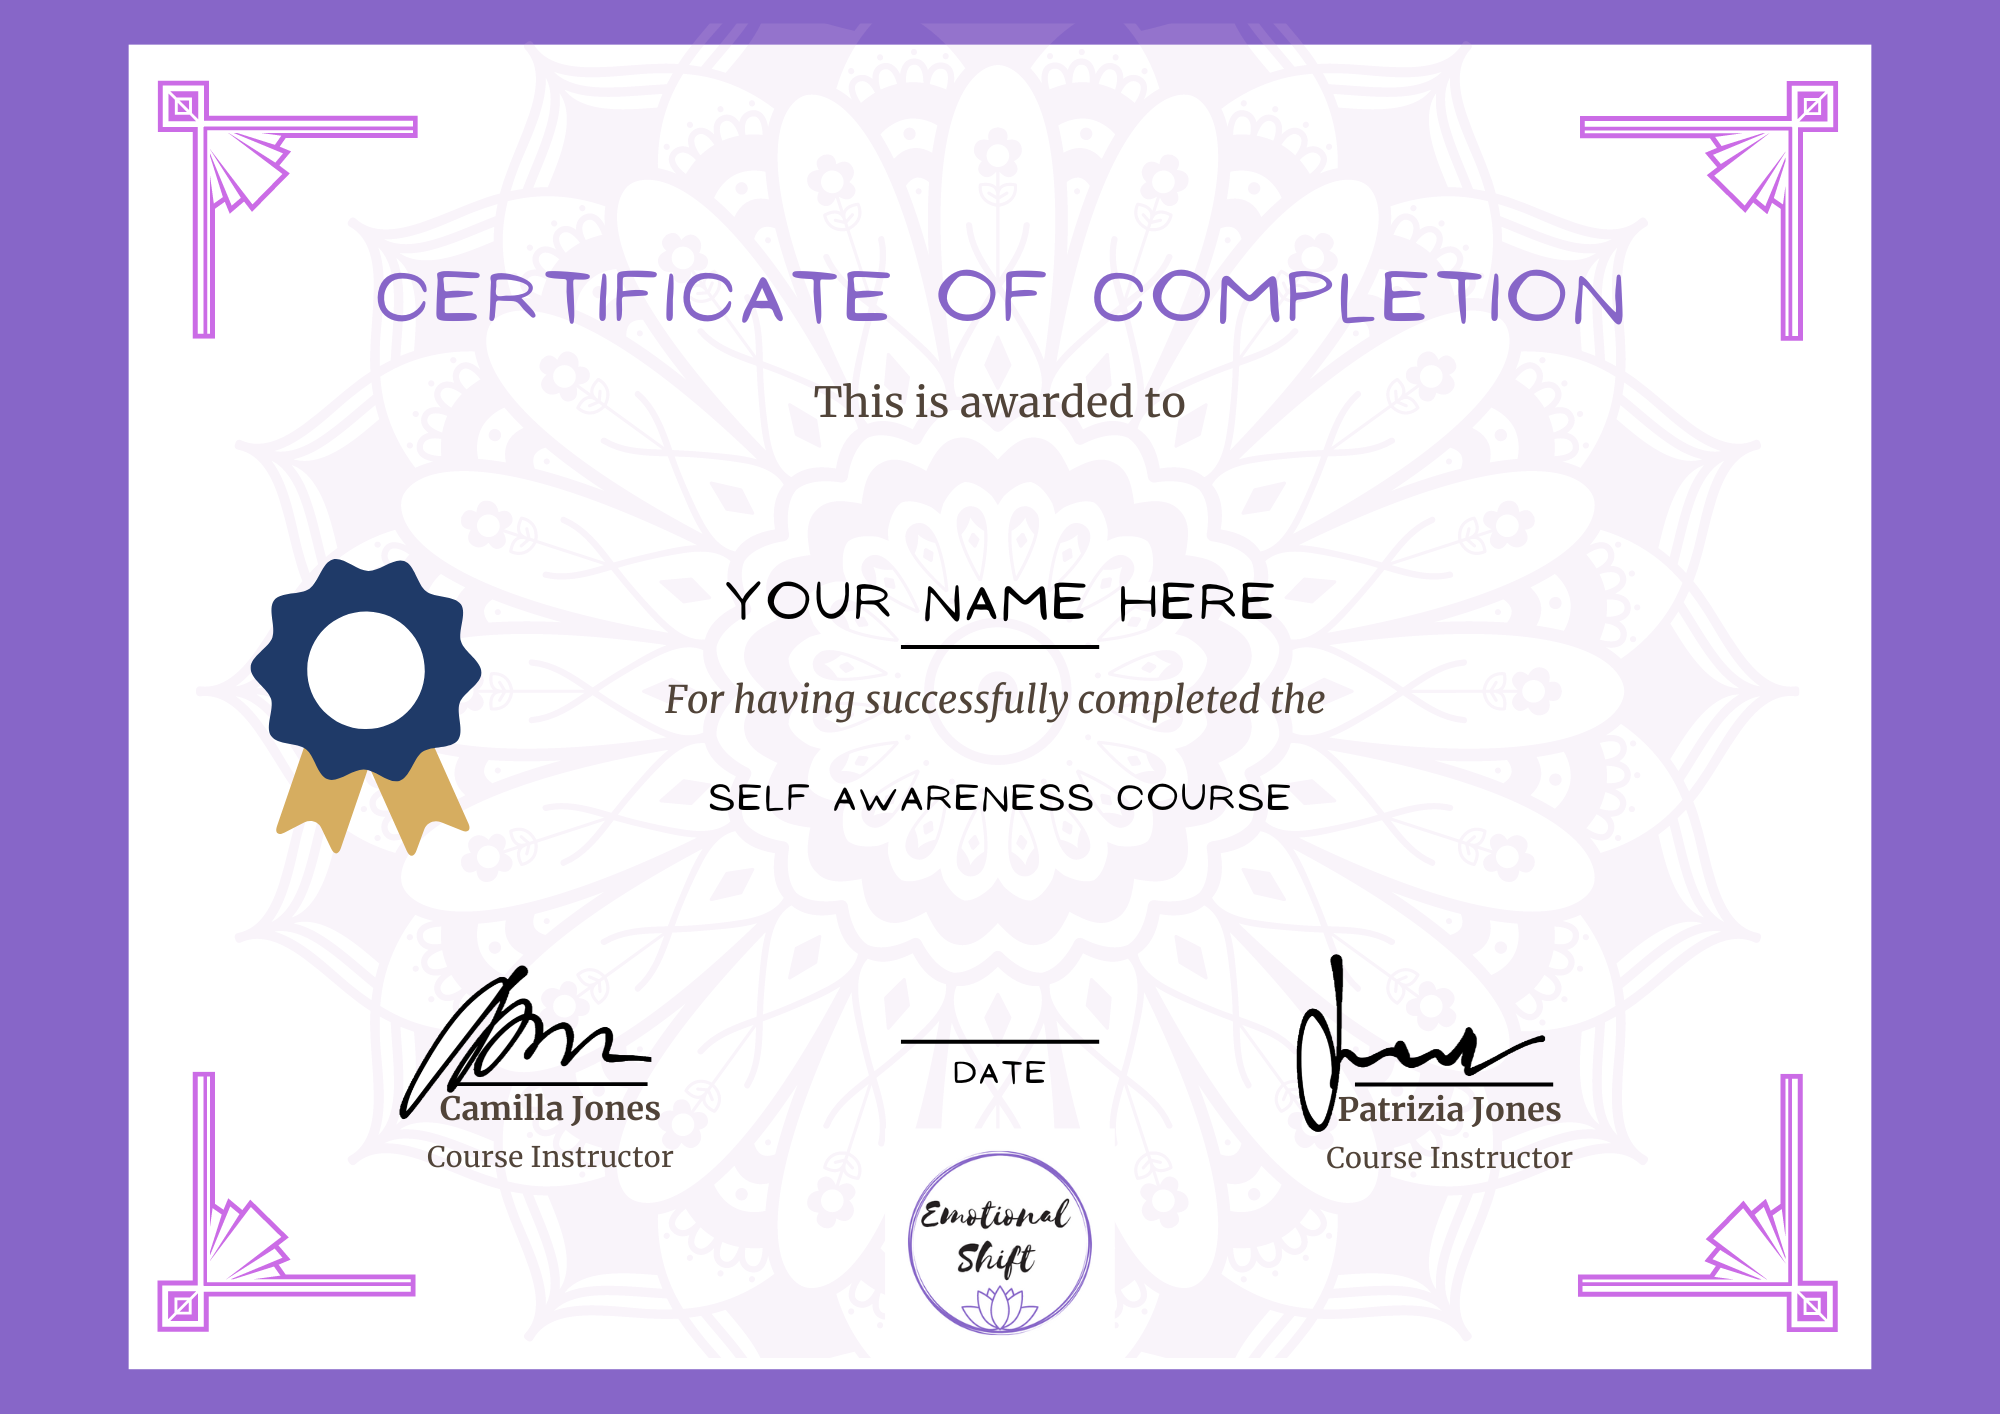 Self awareness course certificate